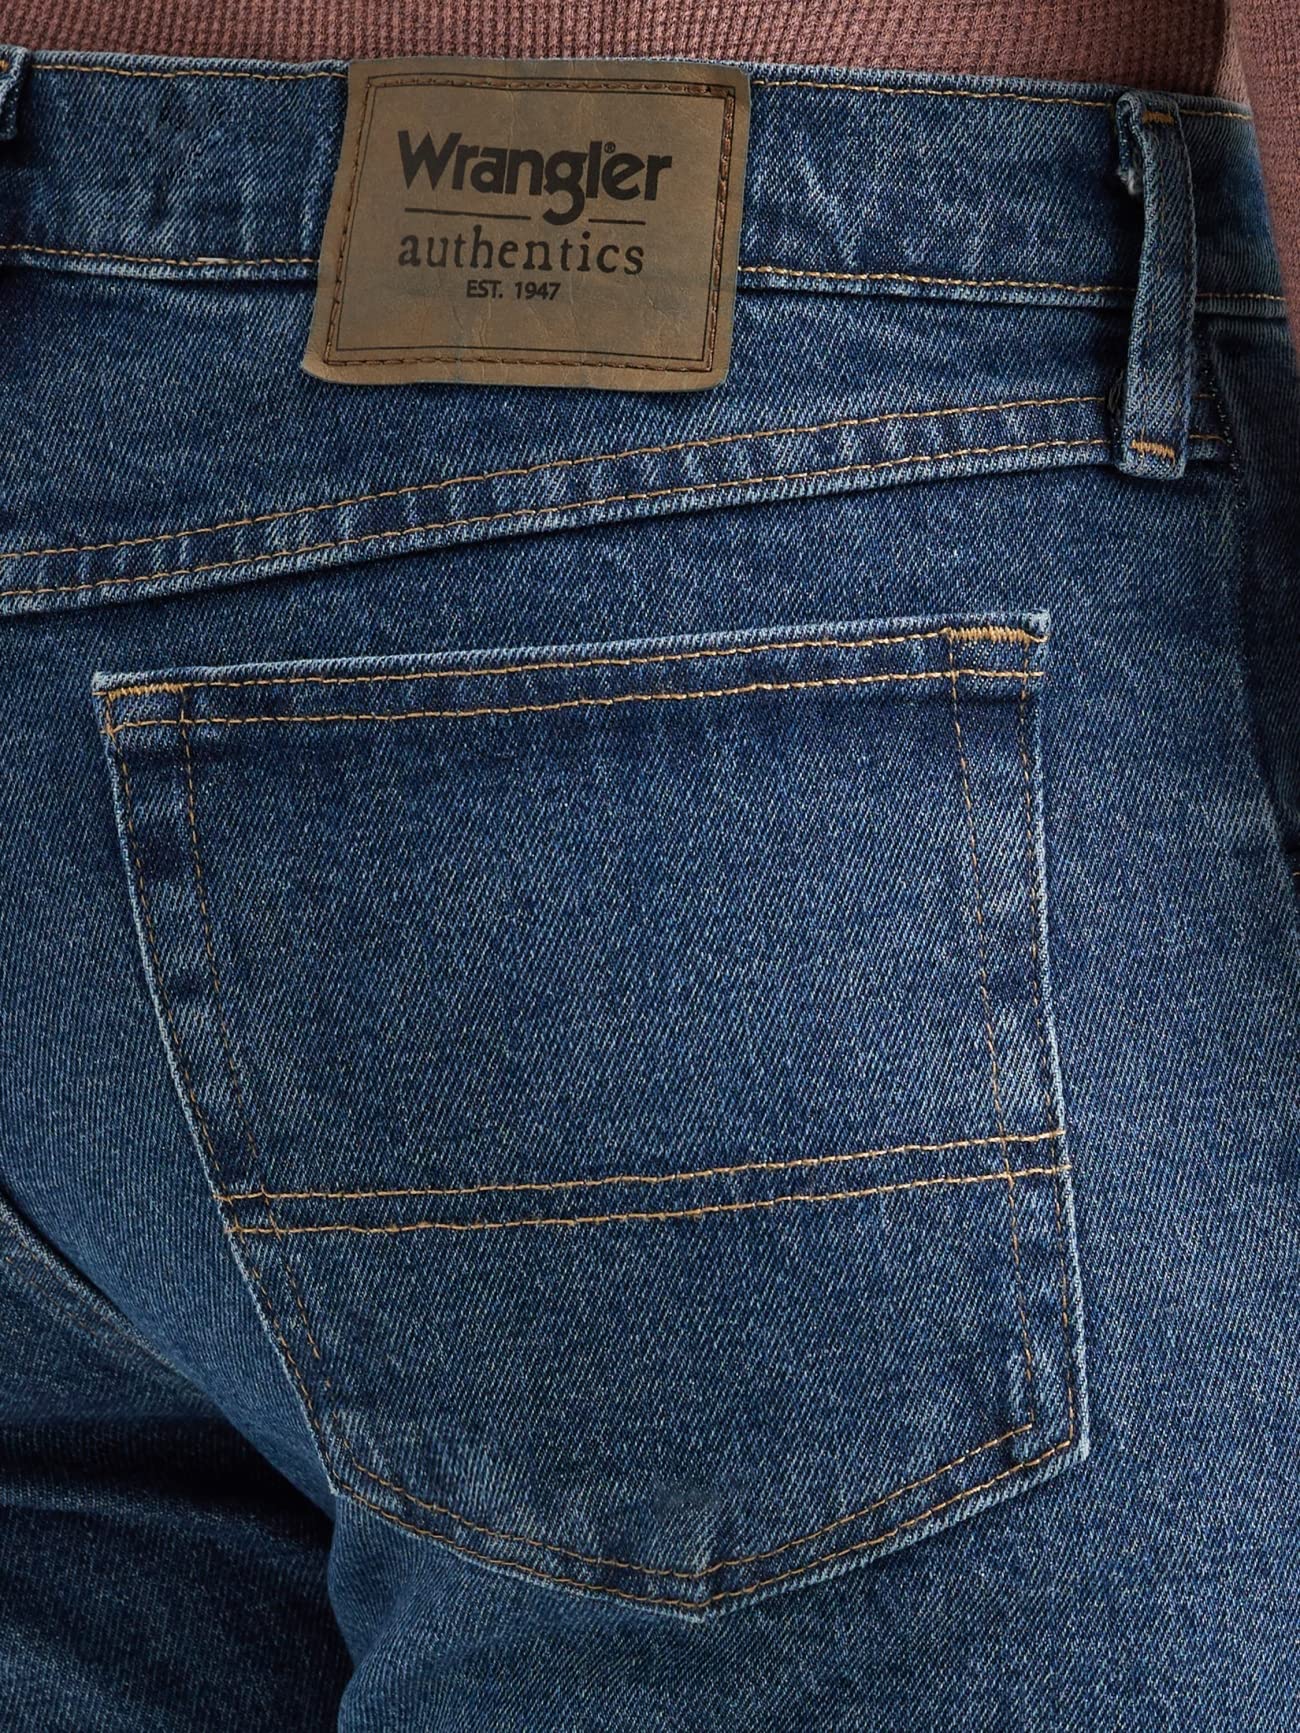 Wrangler Authentics Men's Classic 5-Pocket Regular Fit Jean, Dark Stonewash Flex, 33W X 32L